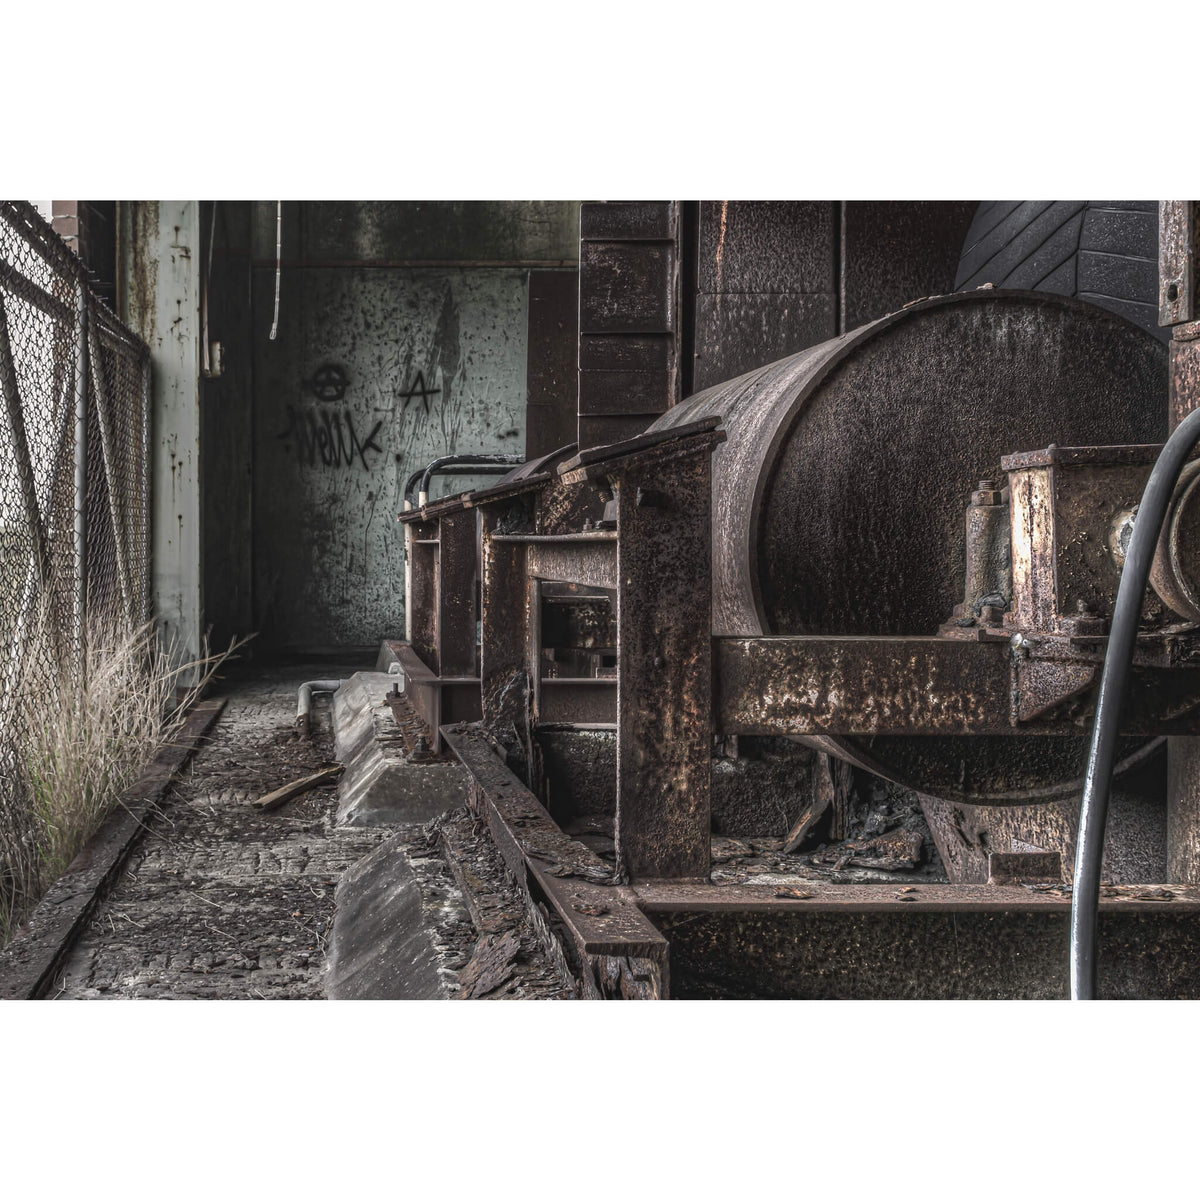 Conveyor Drive End | Wangi Power Station Fine Art Print - Lost Collective Shop